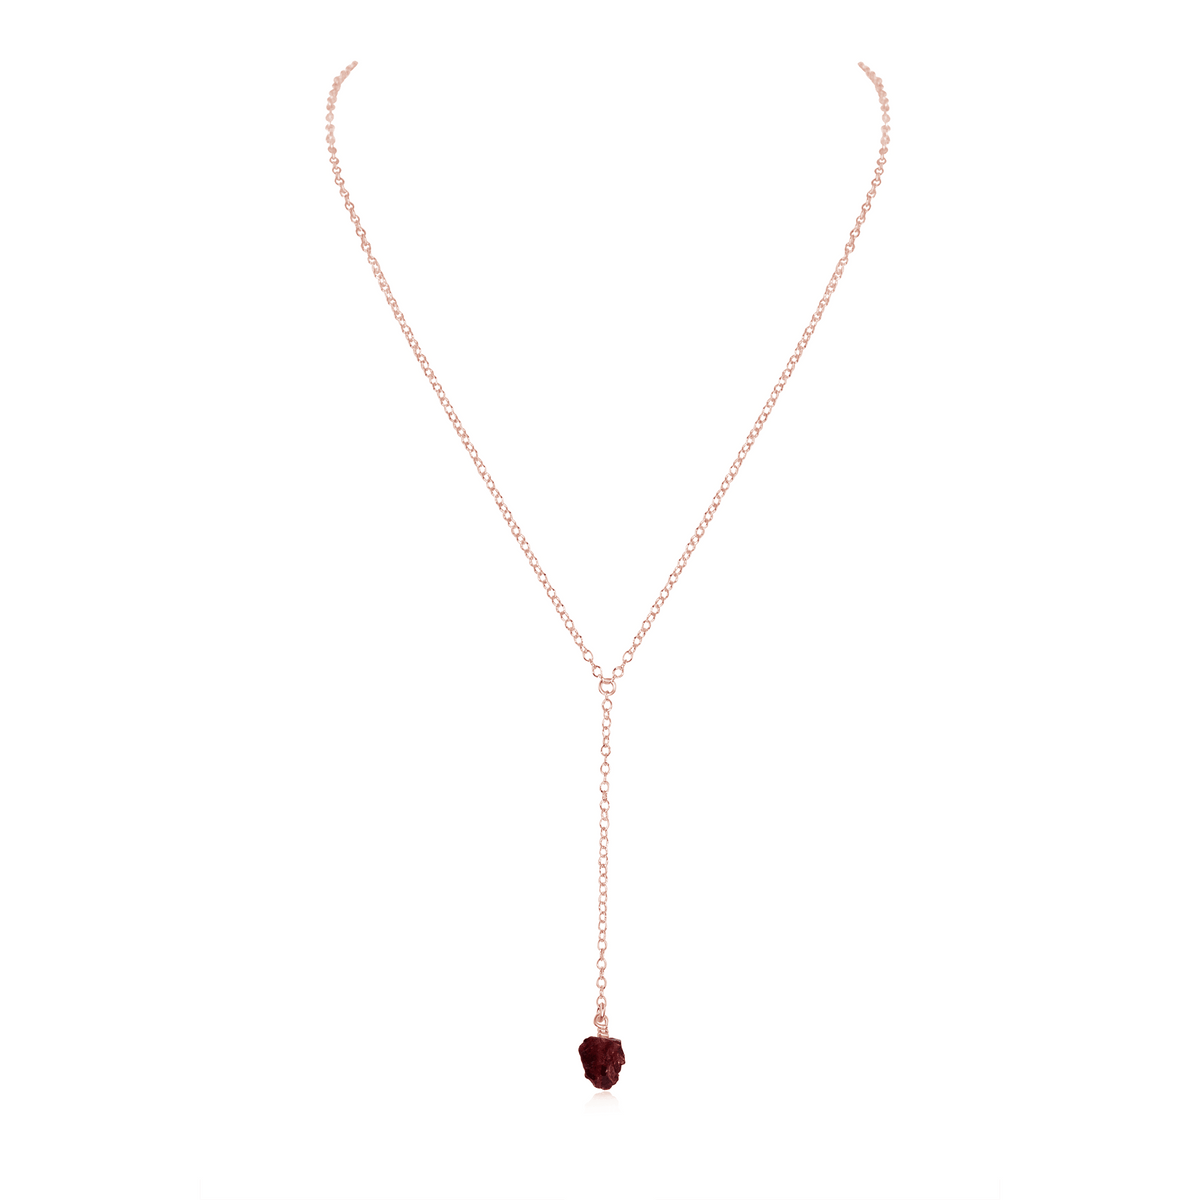 Raw Garnet Crystal Lariat Necklace - Raw Garnet Crystal Lariat Necklace - 14k Rose Gold Fill - Luna Tide Handmade Crystal Jewellery